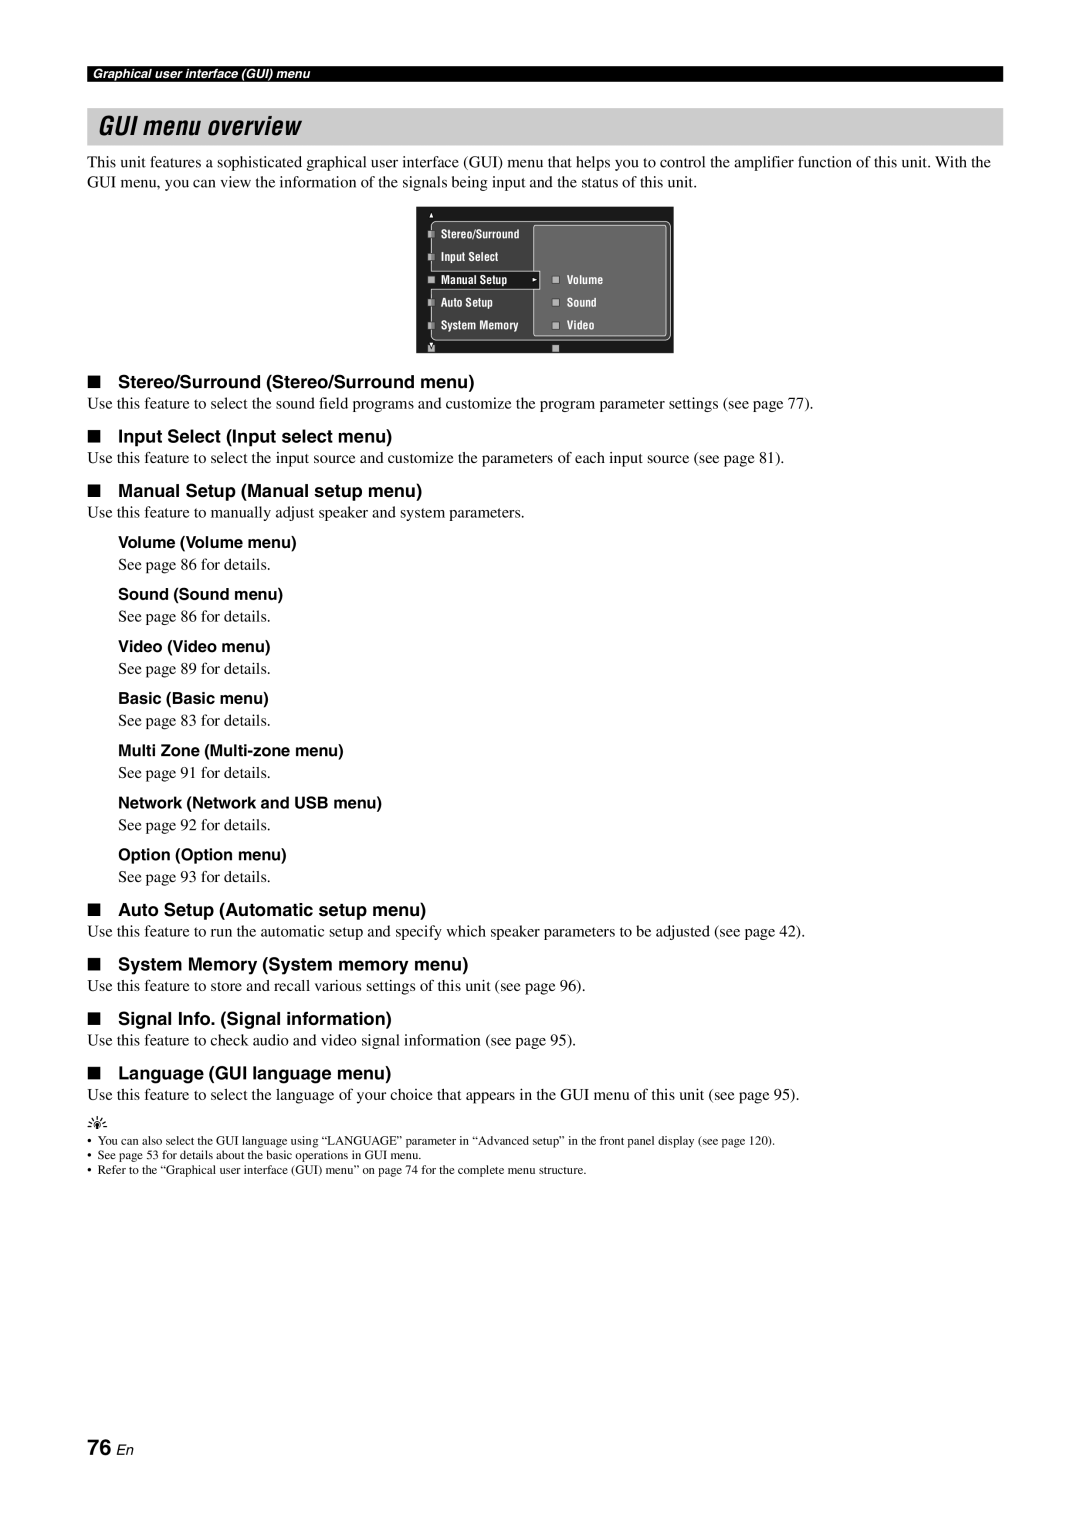 Yamaha DSP-Z11 owner manual GUI menu overview, 76 En, Stereo/Surround Stereo/Surround menu, Input Select Input select menu 